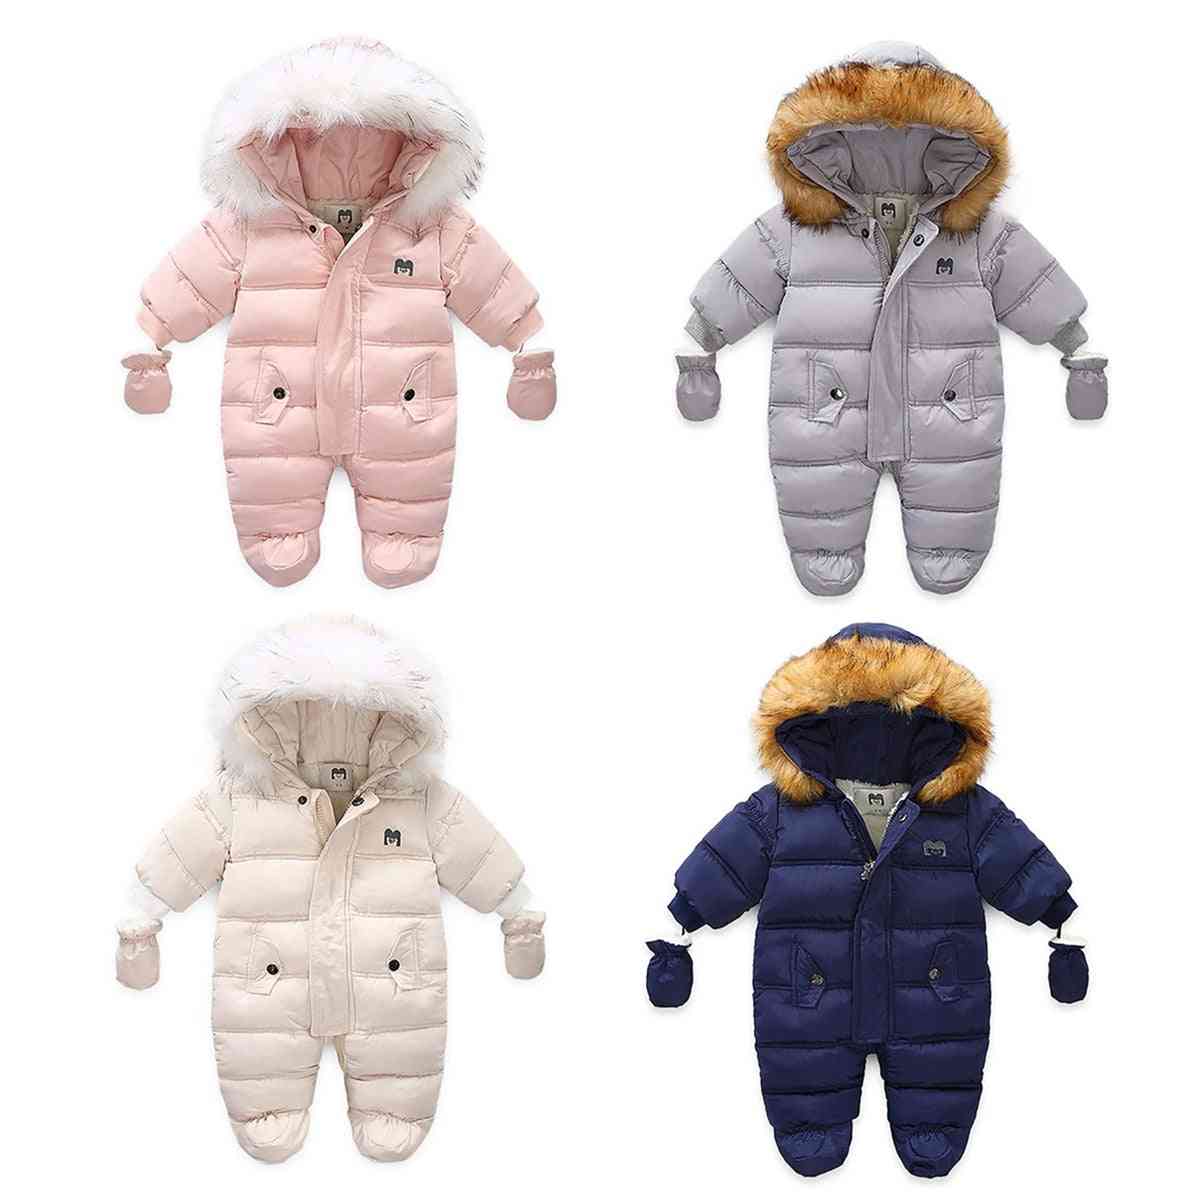 Winter Warm Down Jacket / Coat, Snowsuit Parka Real Fur Overalls Overcoat